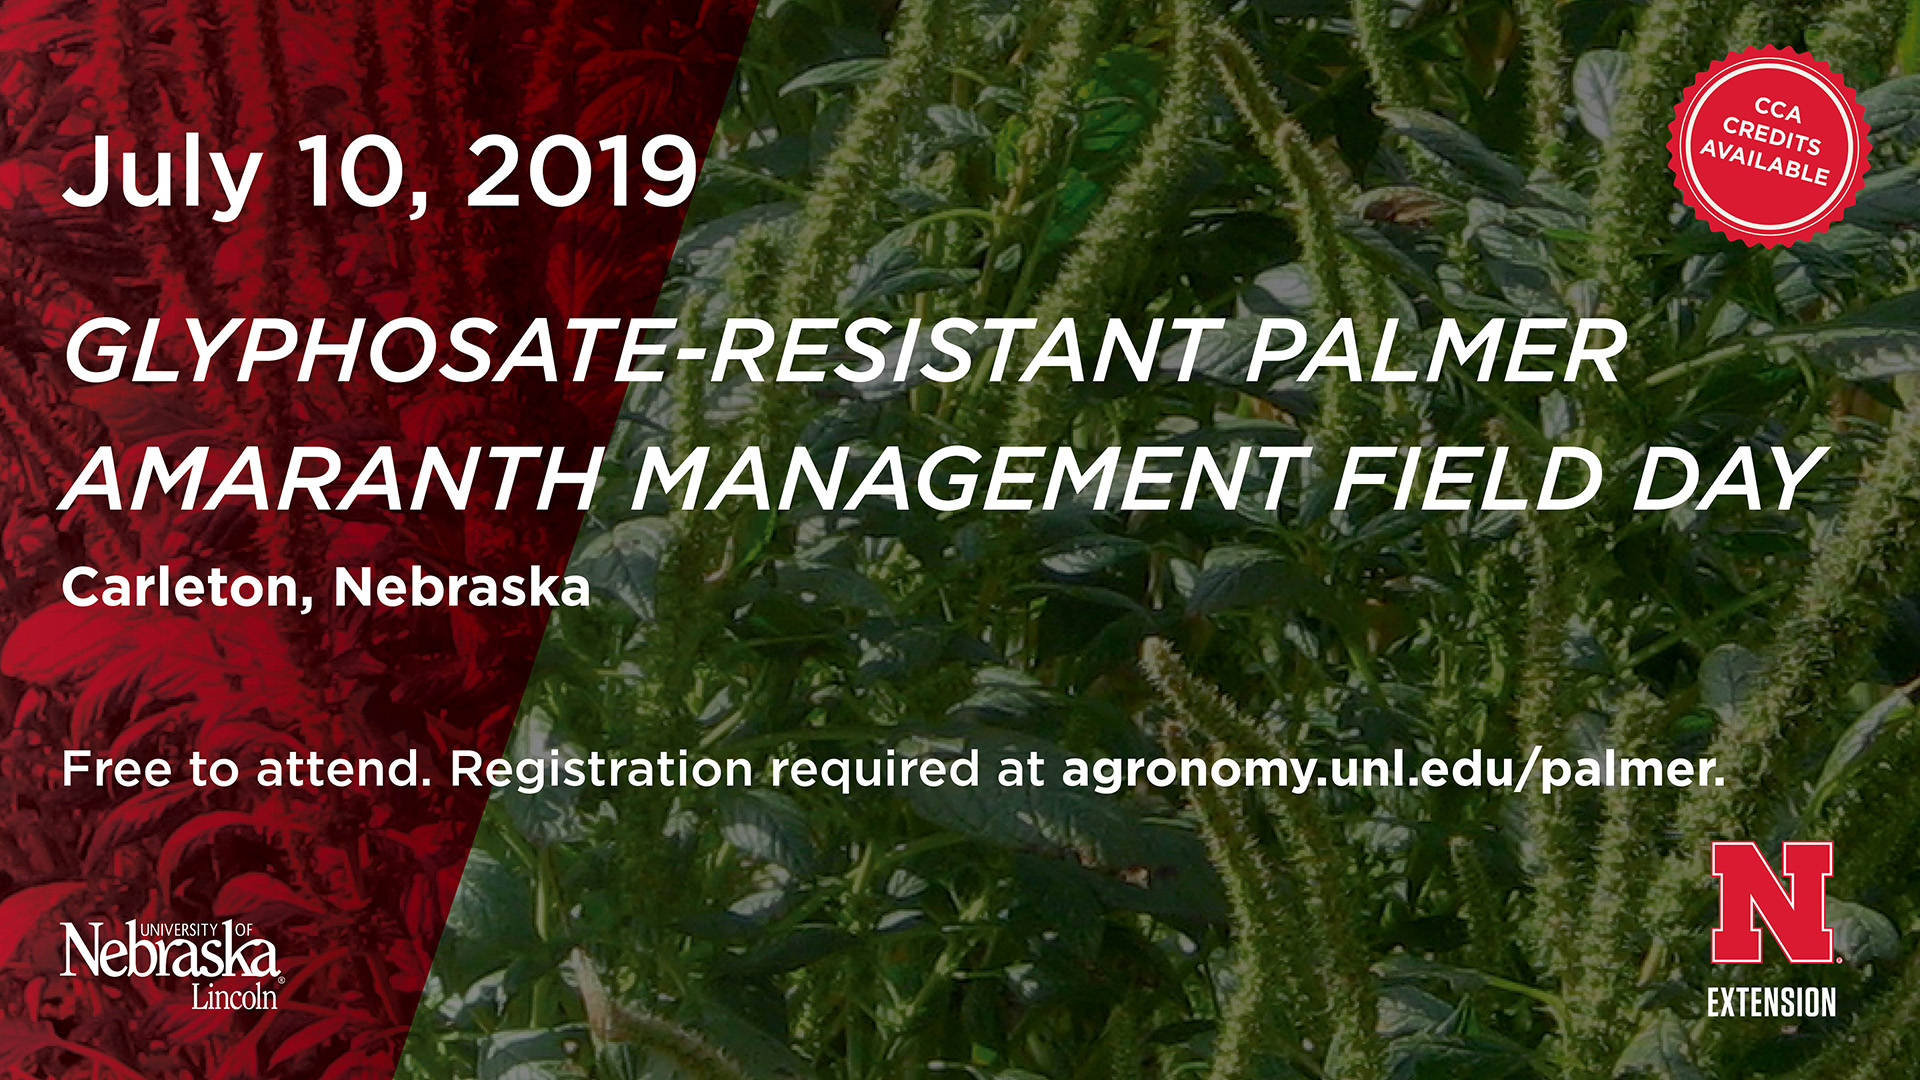 Glyphosate-Resistant Palmer Amaranth Field Day is July 10